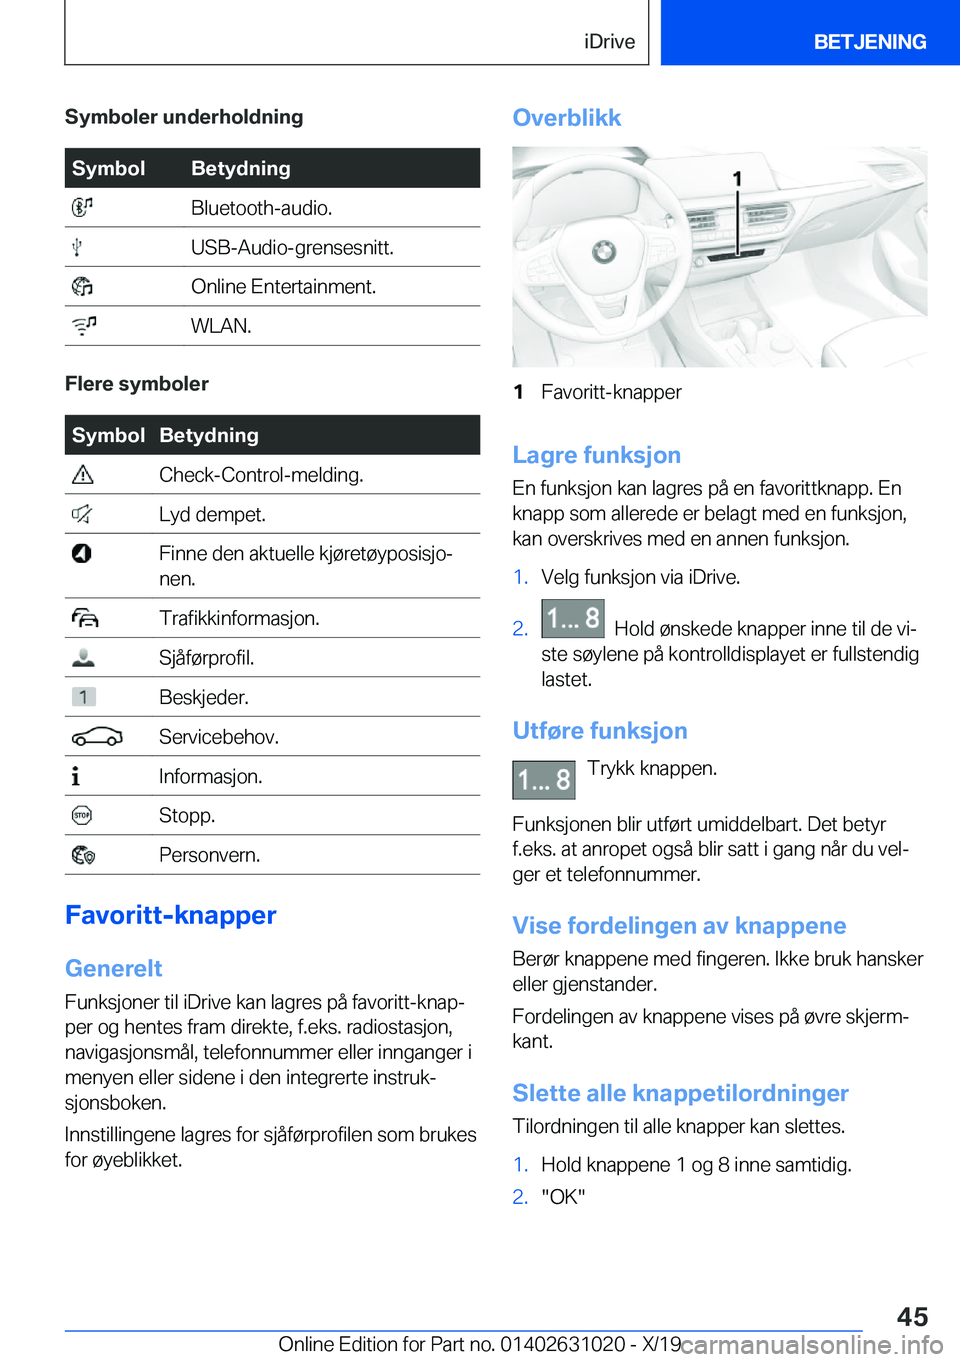 BMW 2 SERIES GRAN COUPE 2020  InstruksjonsbØker (in Norwegian) �S�y�m�b�o�l�e�r��u�n�d�e�r�h�o�l�d�n�i�n�g�S�y�m�b�o�l�B�e�t�y�d�n�i�n�g��B�l�u�e�t�o�o�t�h�-�a�u�d�i�o�.��U�S�B�-�A�u�d�i�o�-�g�r�e�n�s�e�s�n�i�t�t�.��O�n�l�i�n�e��E�n�t�e�r�t�a�i�n�m�e�n�t�.�